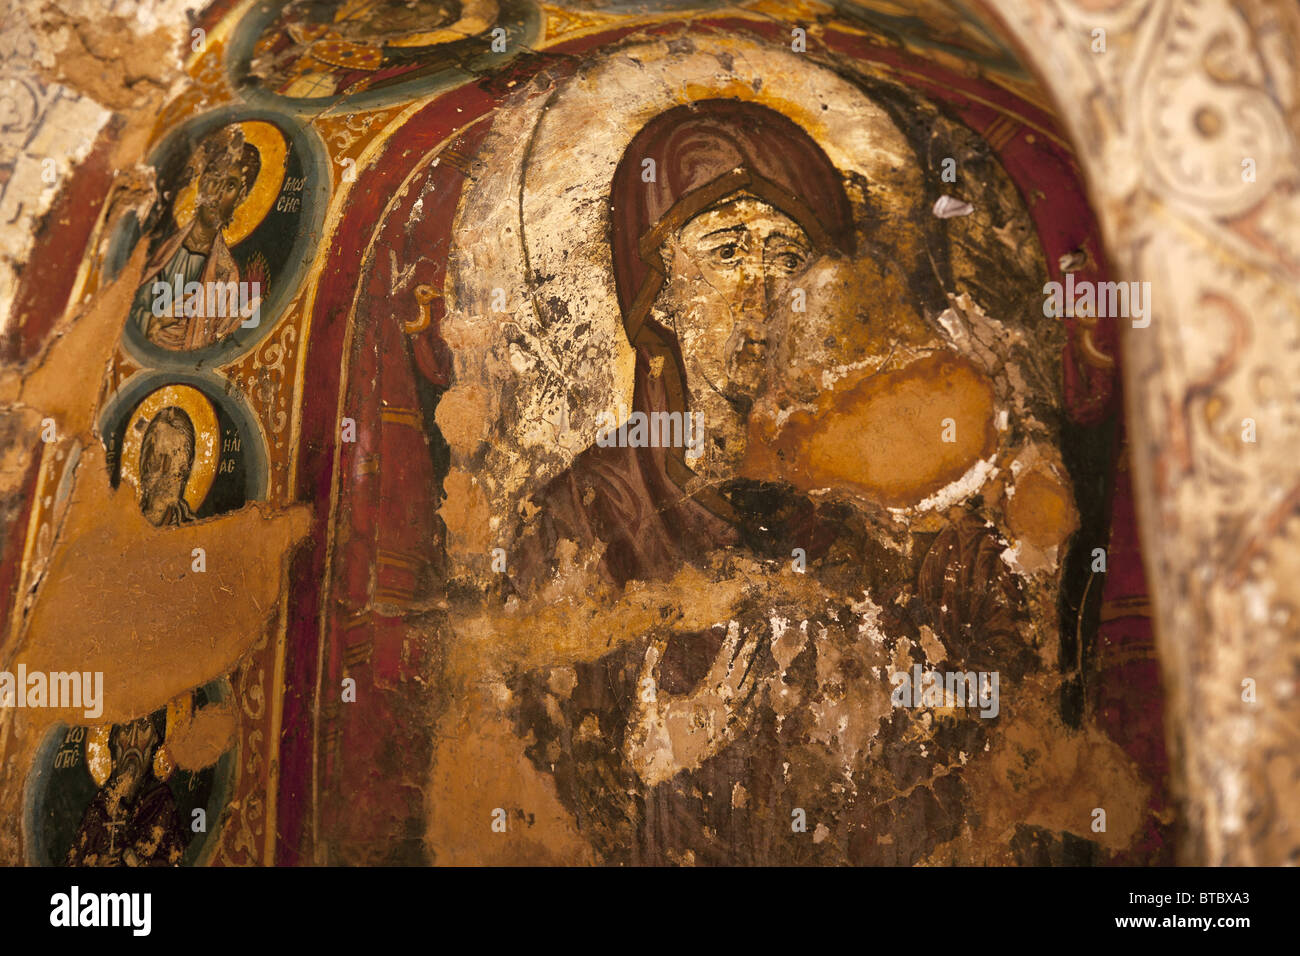 religiöse Malerei an die orthodoxe Katharinenkloster in der Nähe von St. Catherine oder El Miga Dorf, Sinai, Ägypten, Afrika, Stockfoto